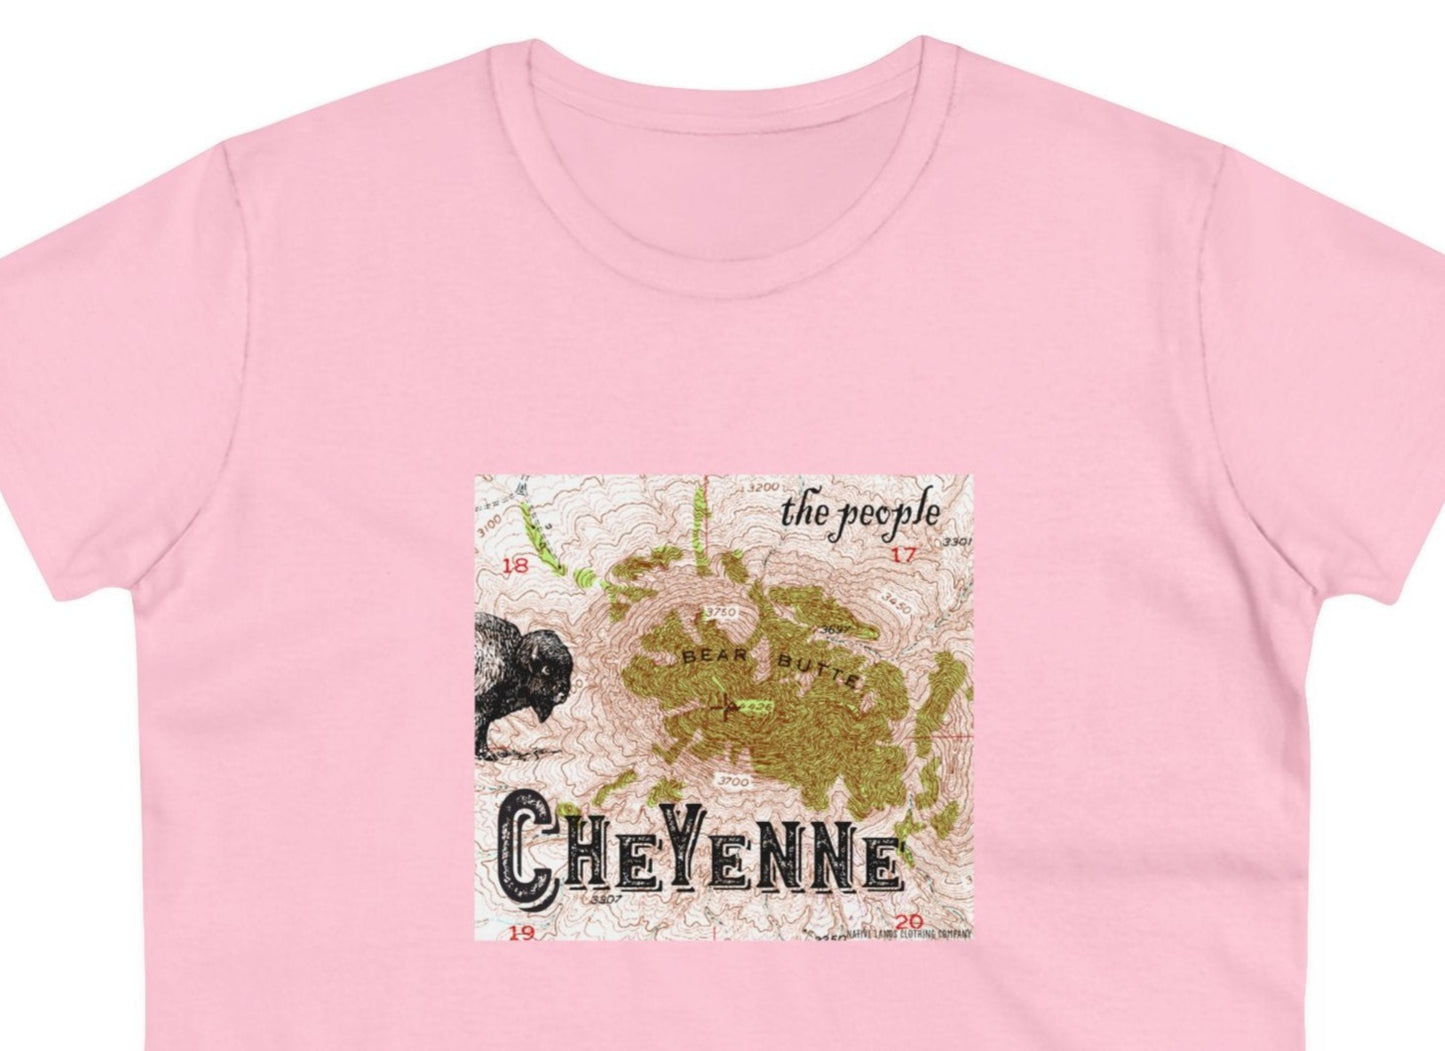 Womens Cheyenne Tribe Shirt Cotton Native American